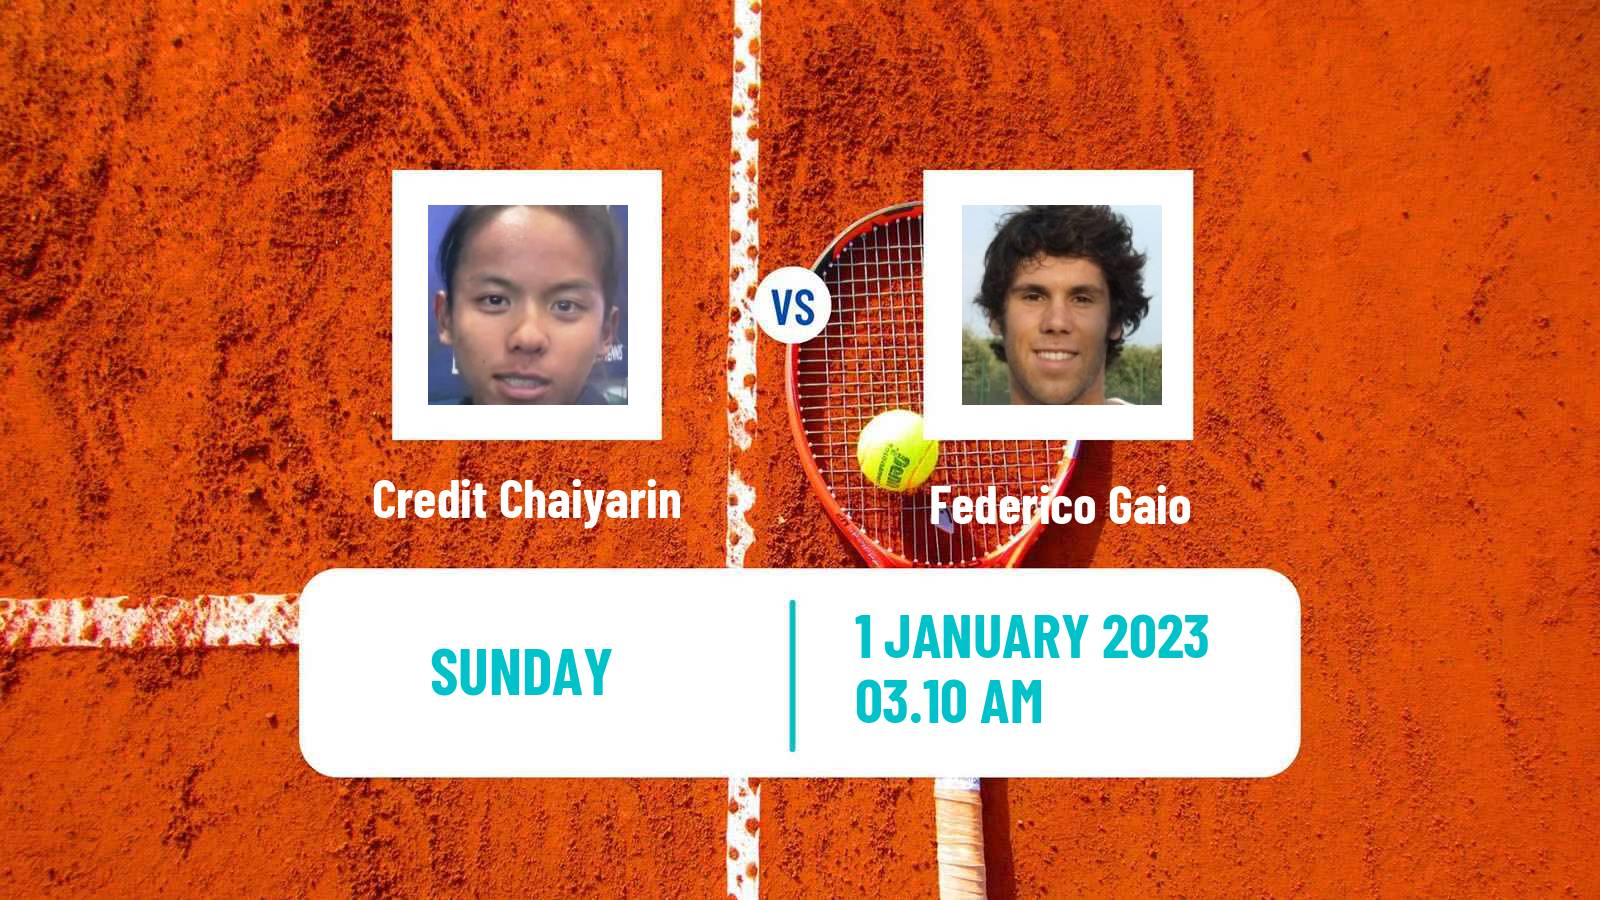 Tennis ATP Challenger Credit Chaiyarin - Federico Gaio